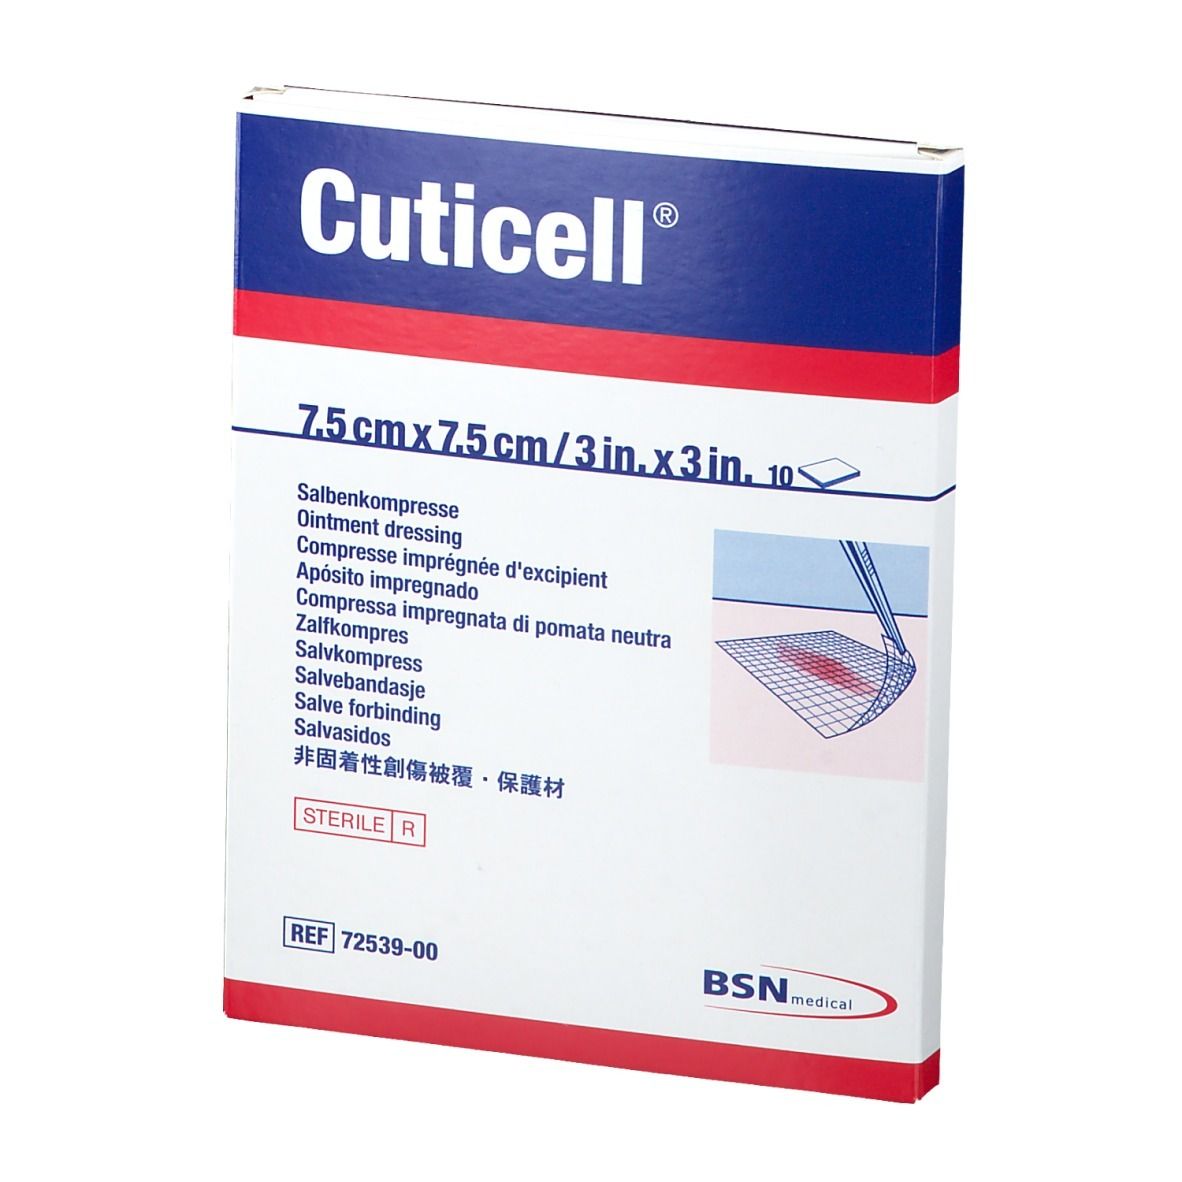 Cuticell® Salbenkompresse 7,5 cm x 7,5 cm